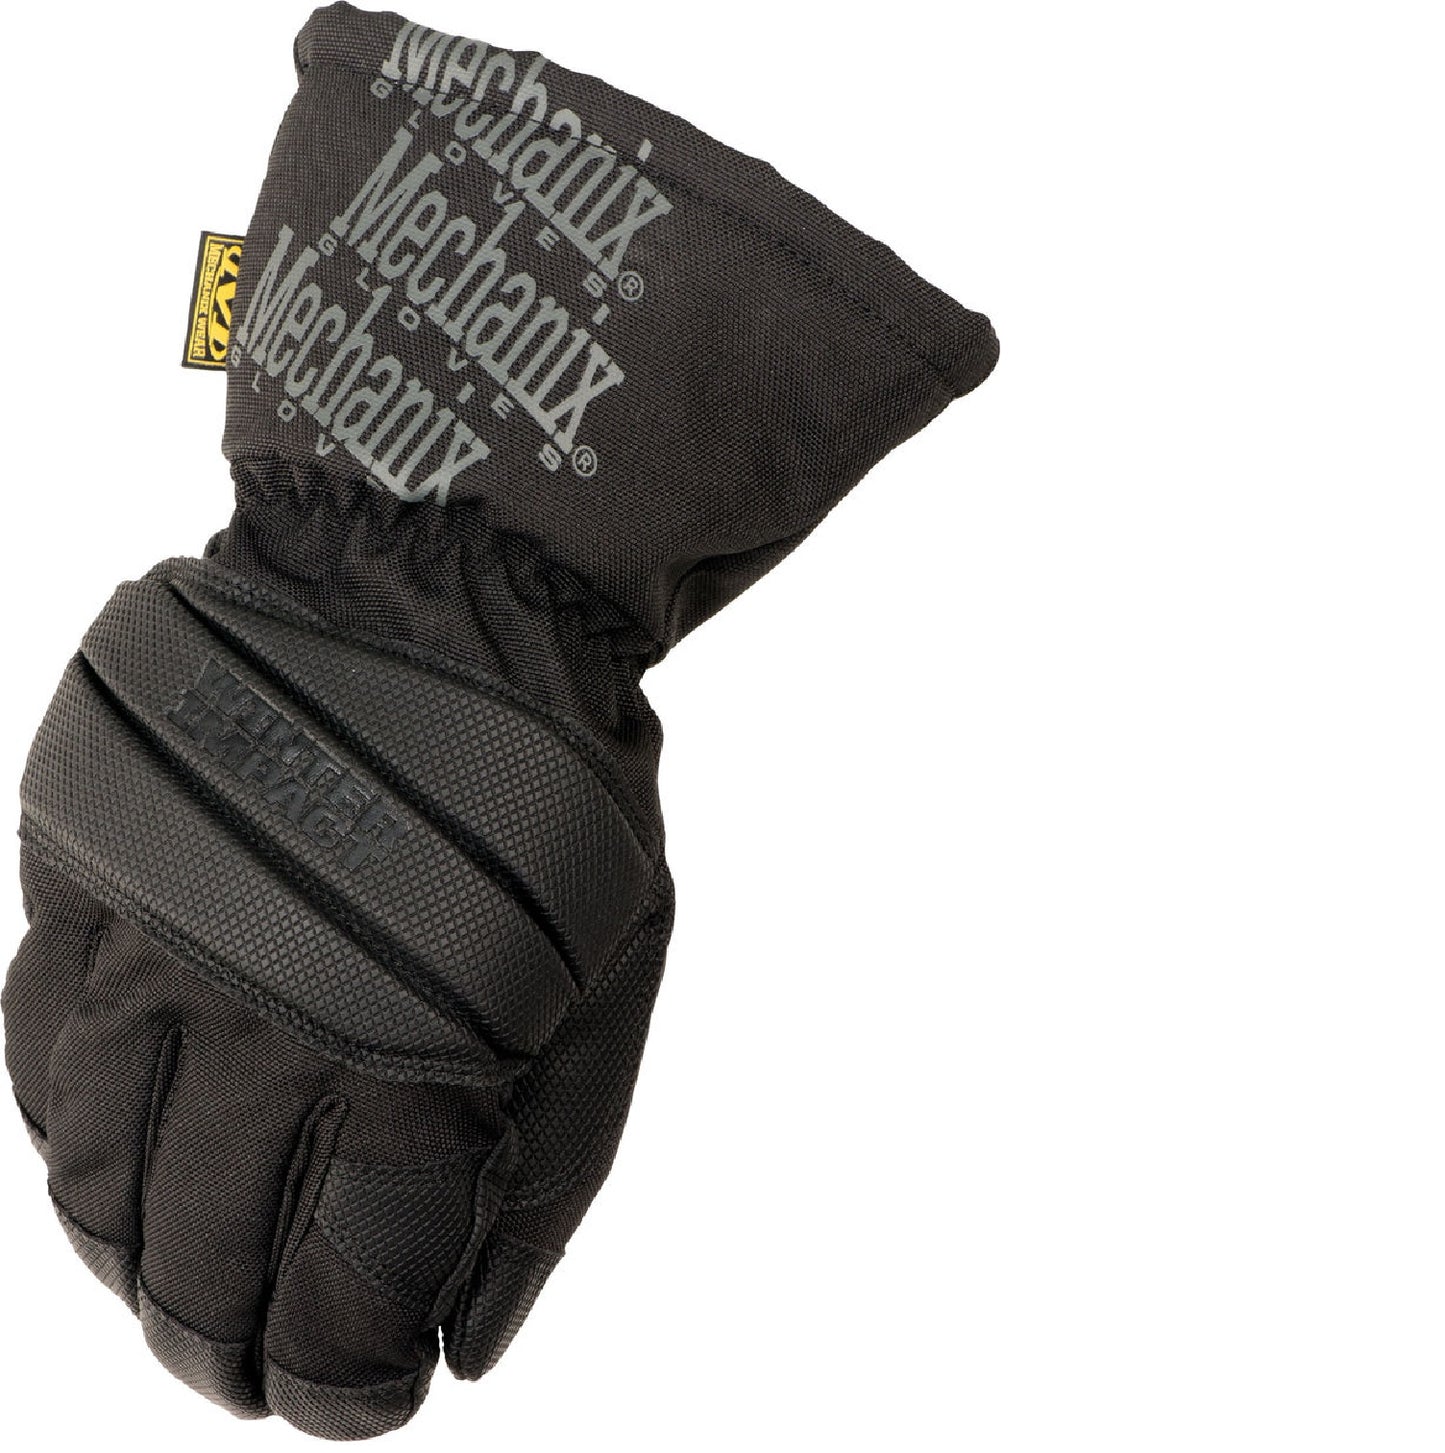 Mechanix Winter Impact Glove Black